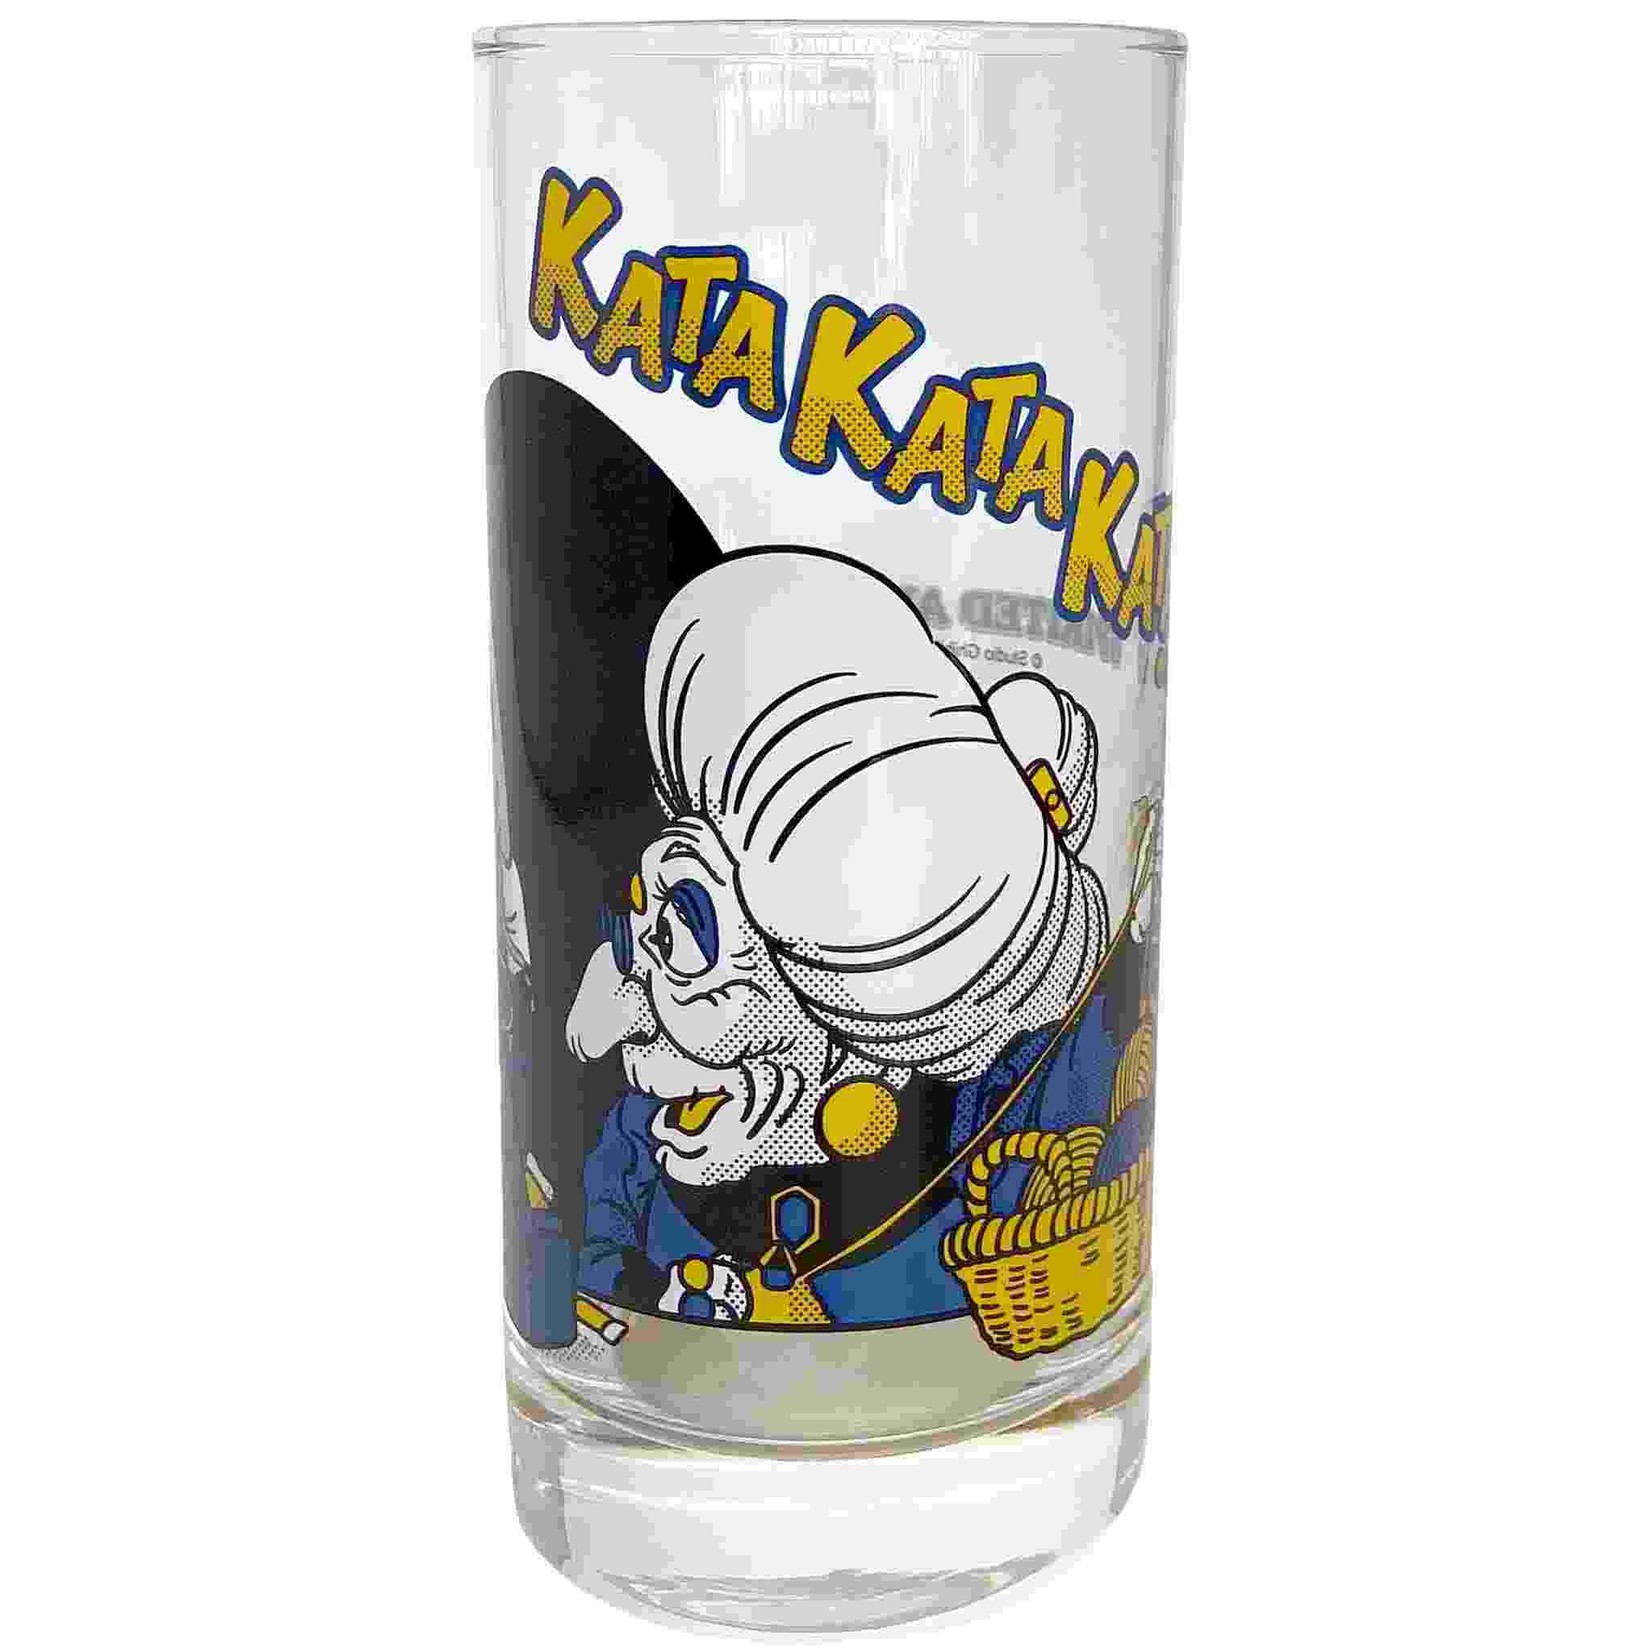 Spirited Away Vintage Glass 12.5oz (Kata Kata Kata) BL-KT-4535